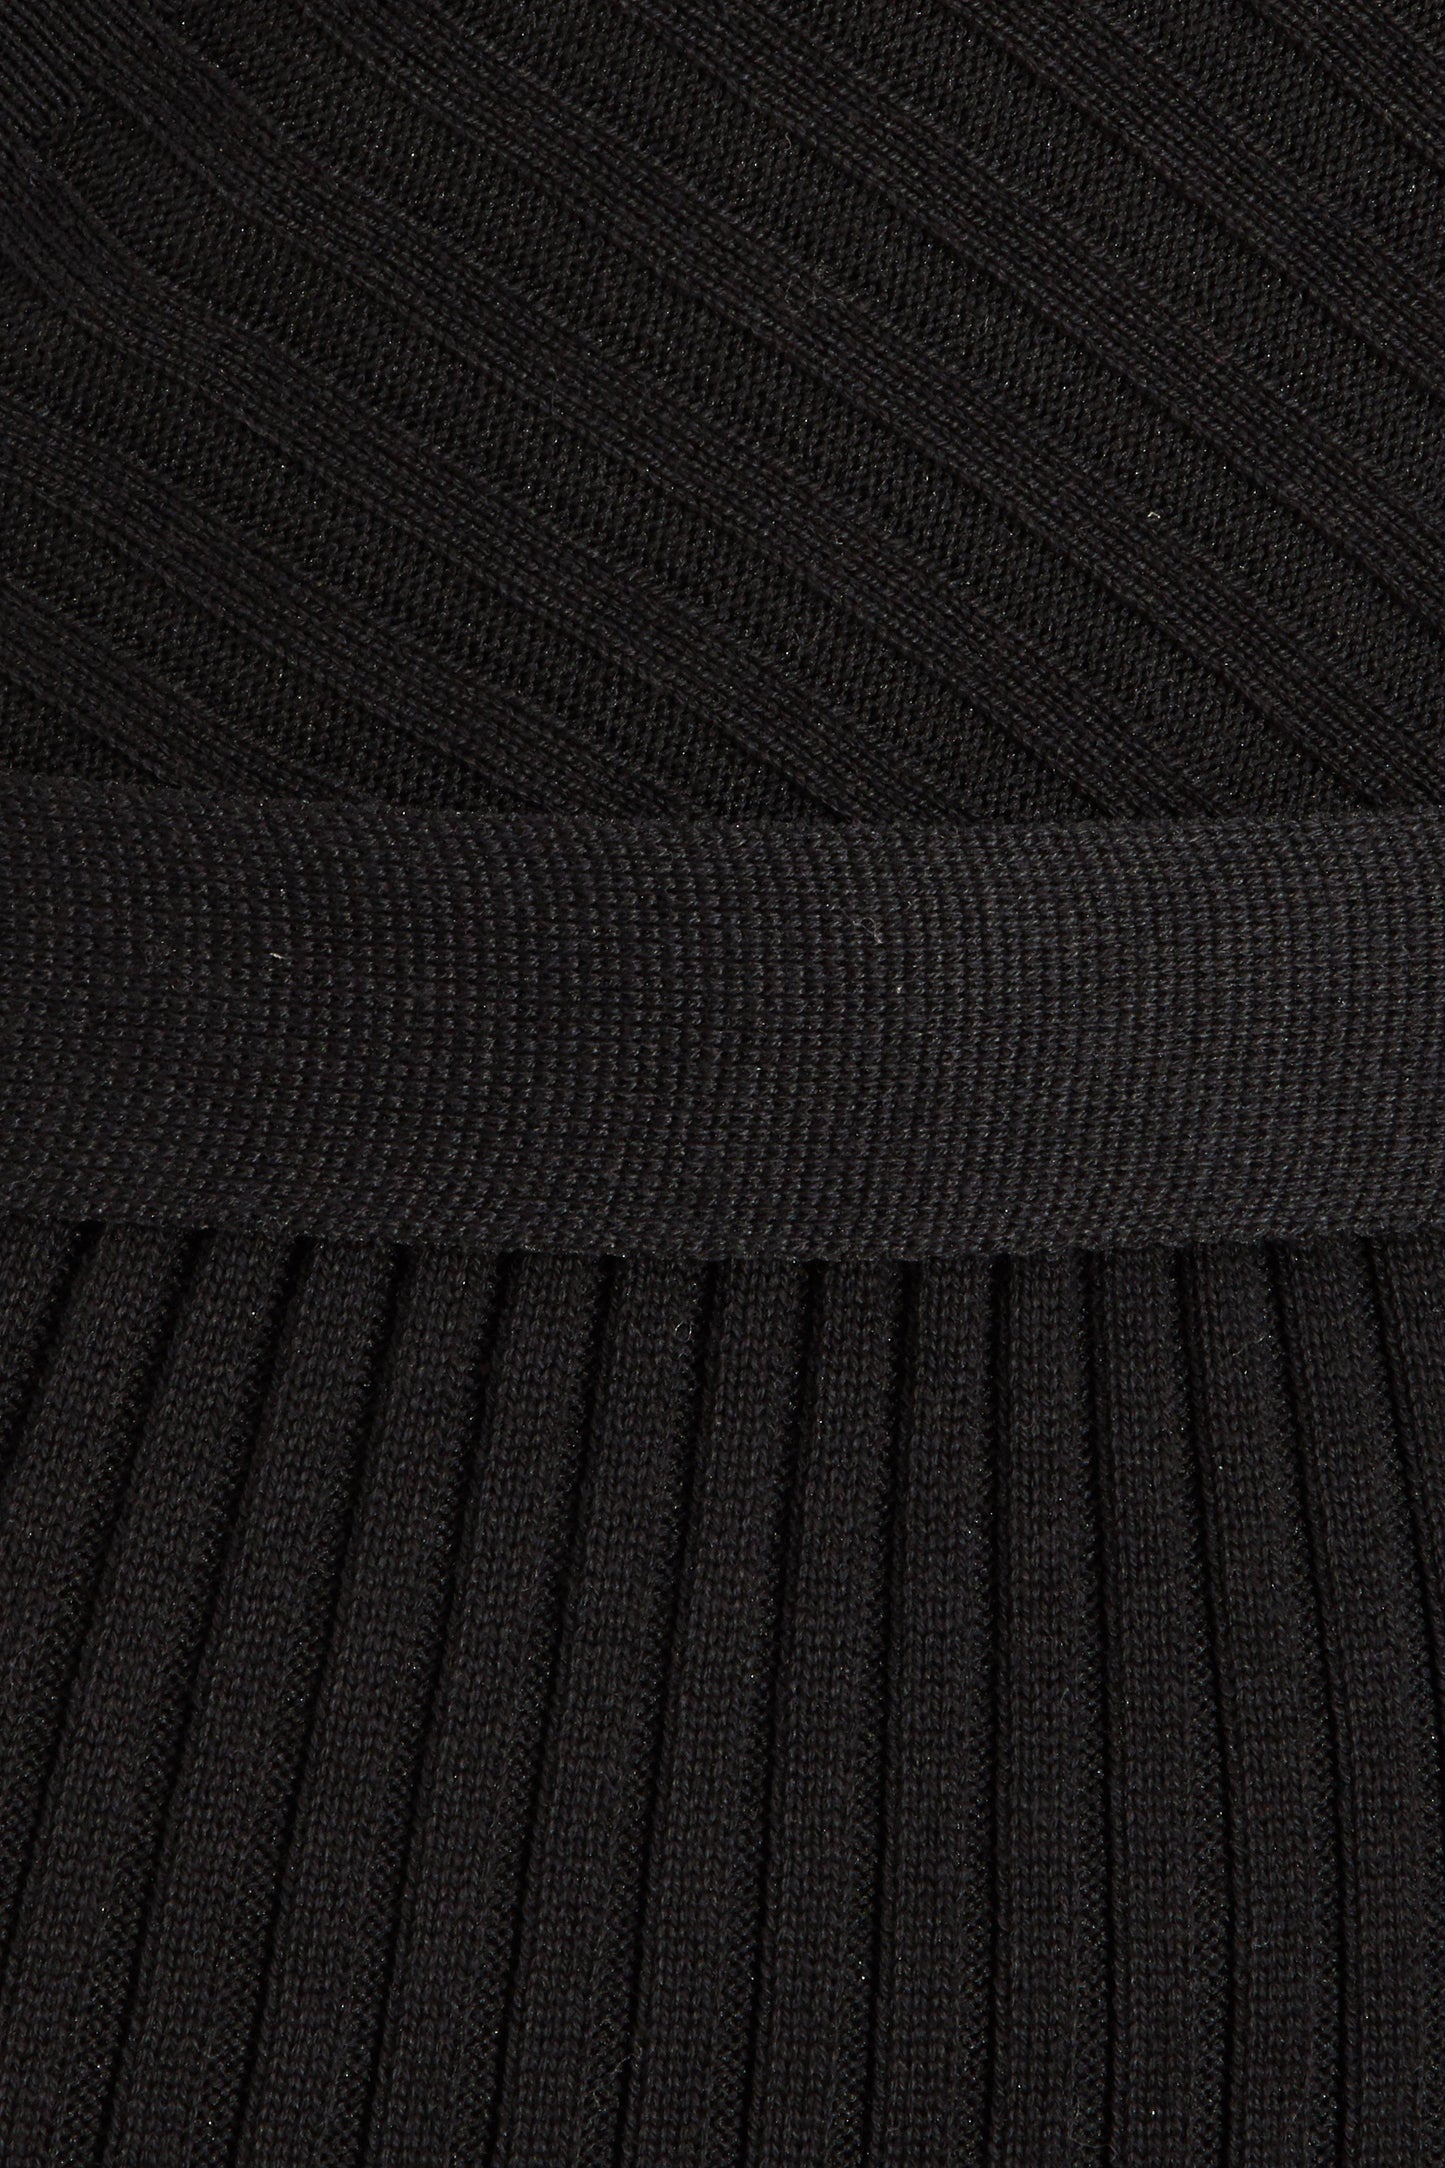 Black Batwing Knitted Jumper Dress